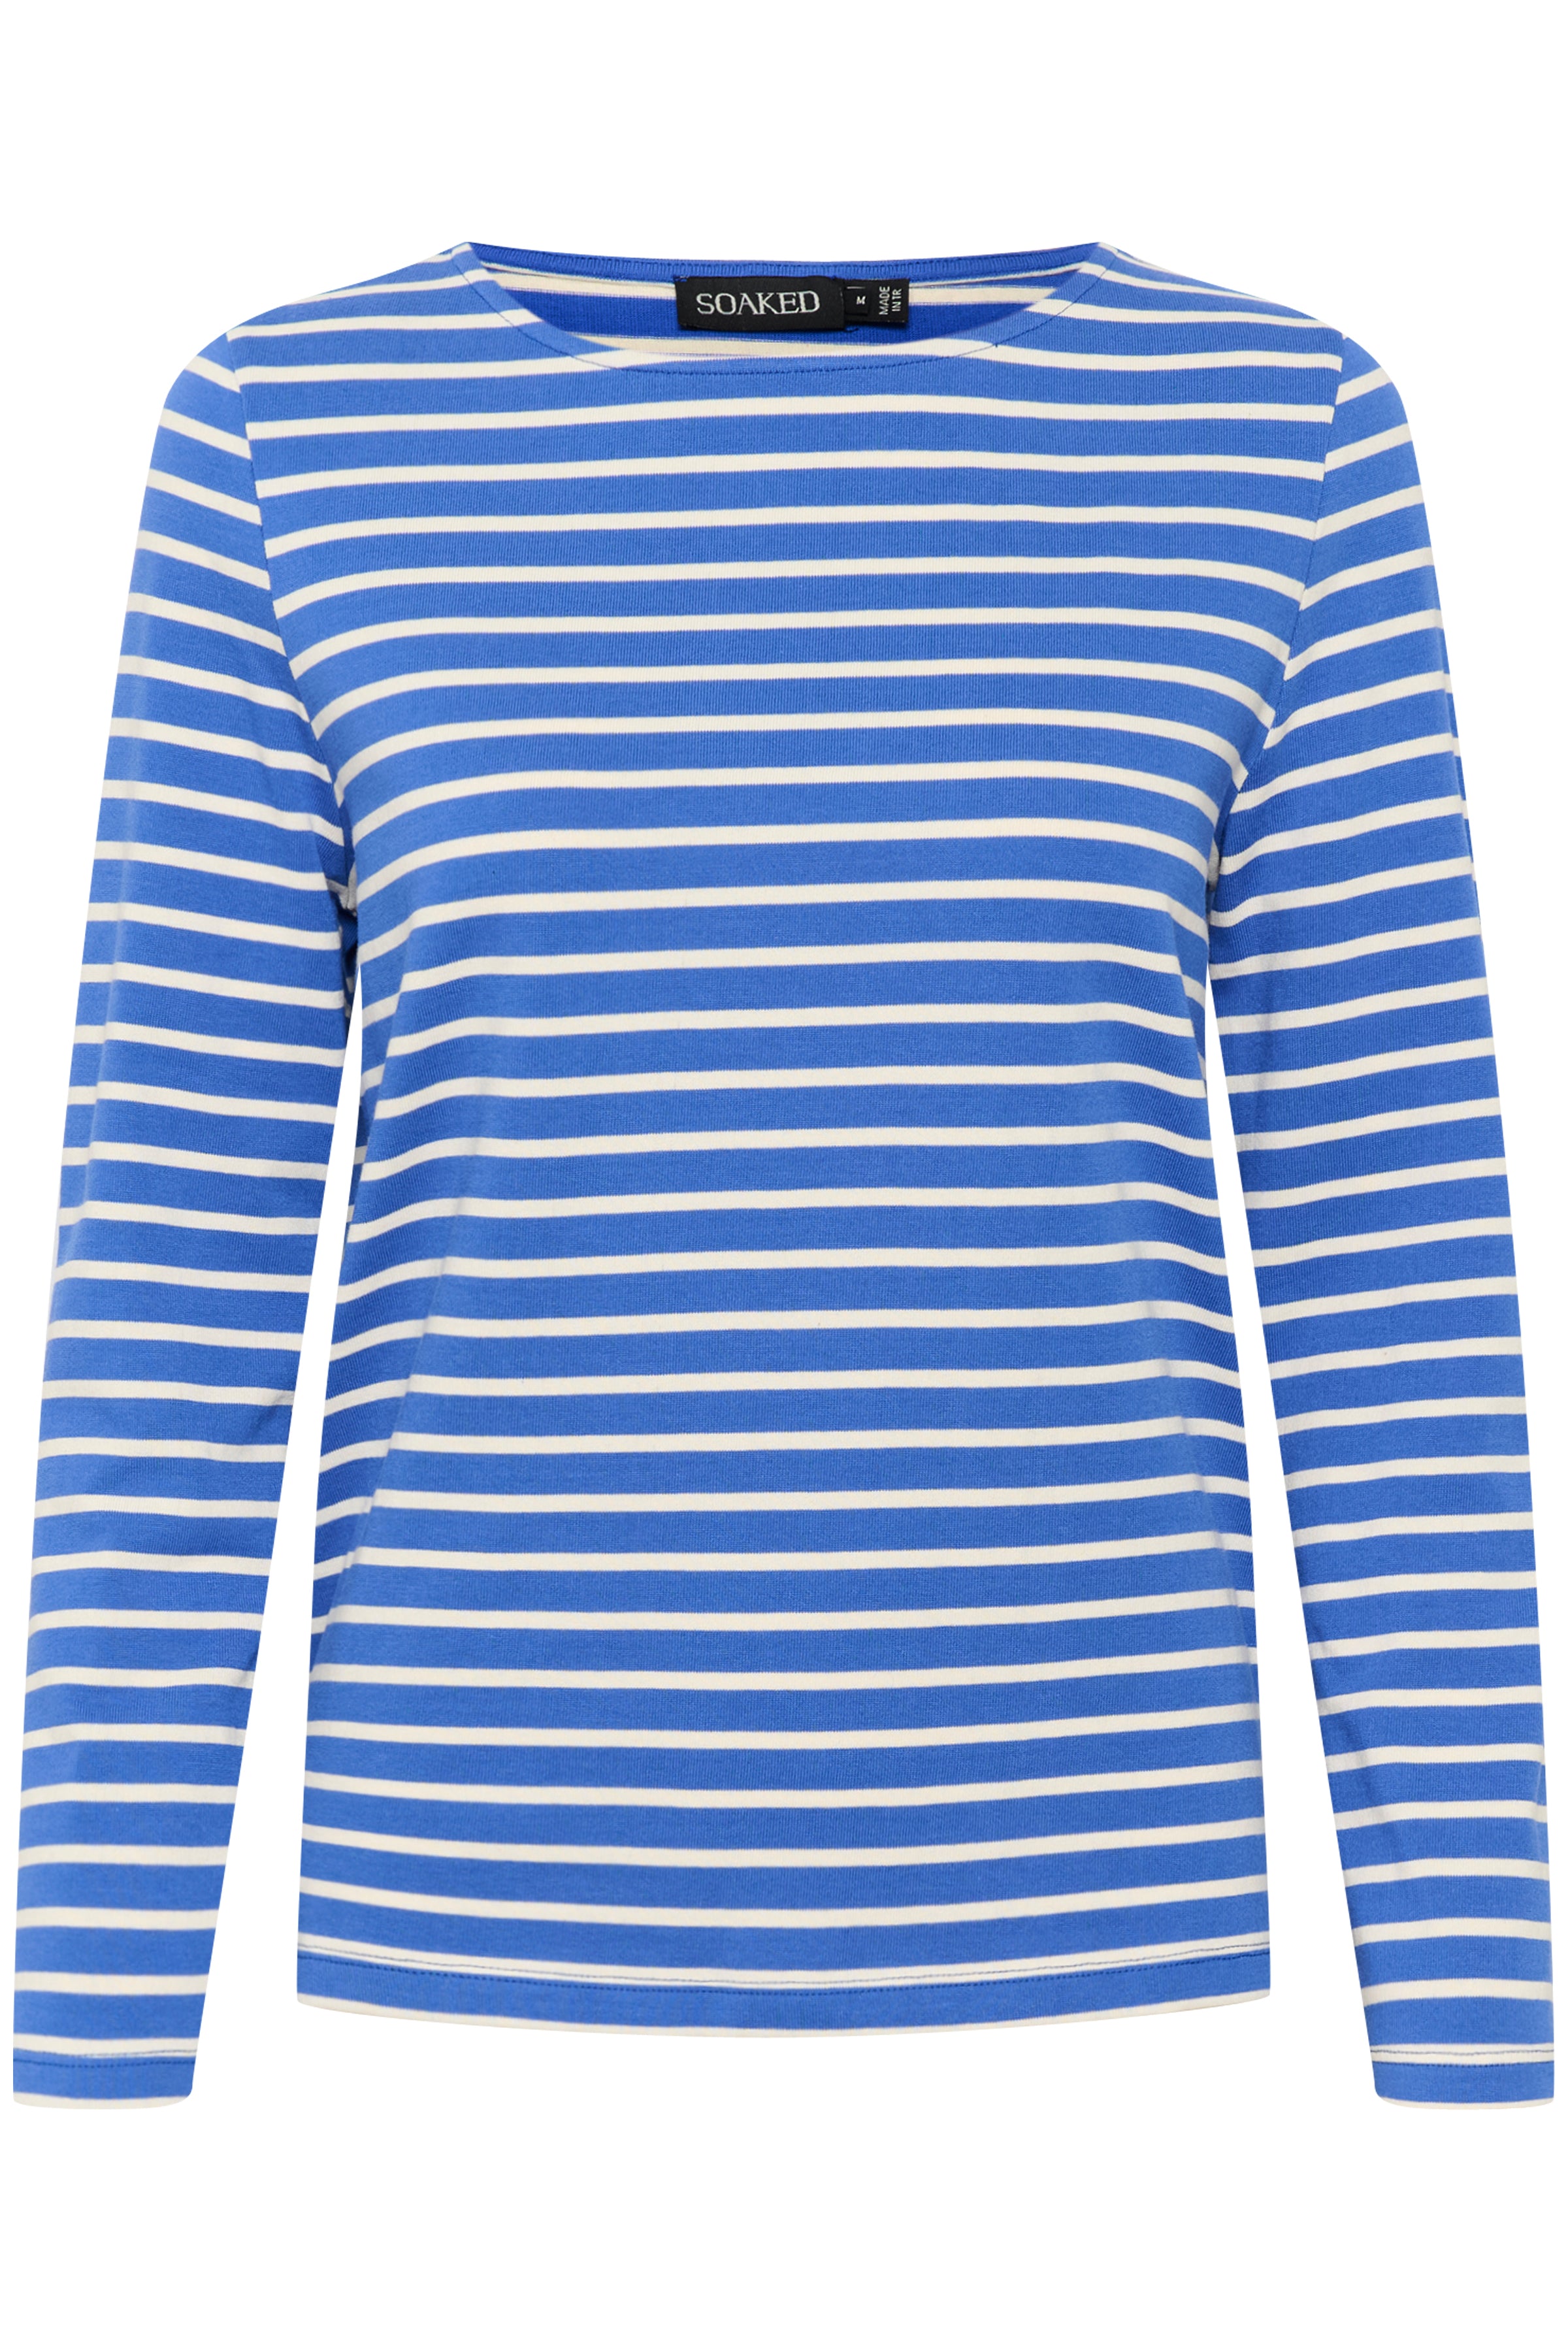 Soaked Neo Long sleeve - Blue stripe